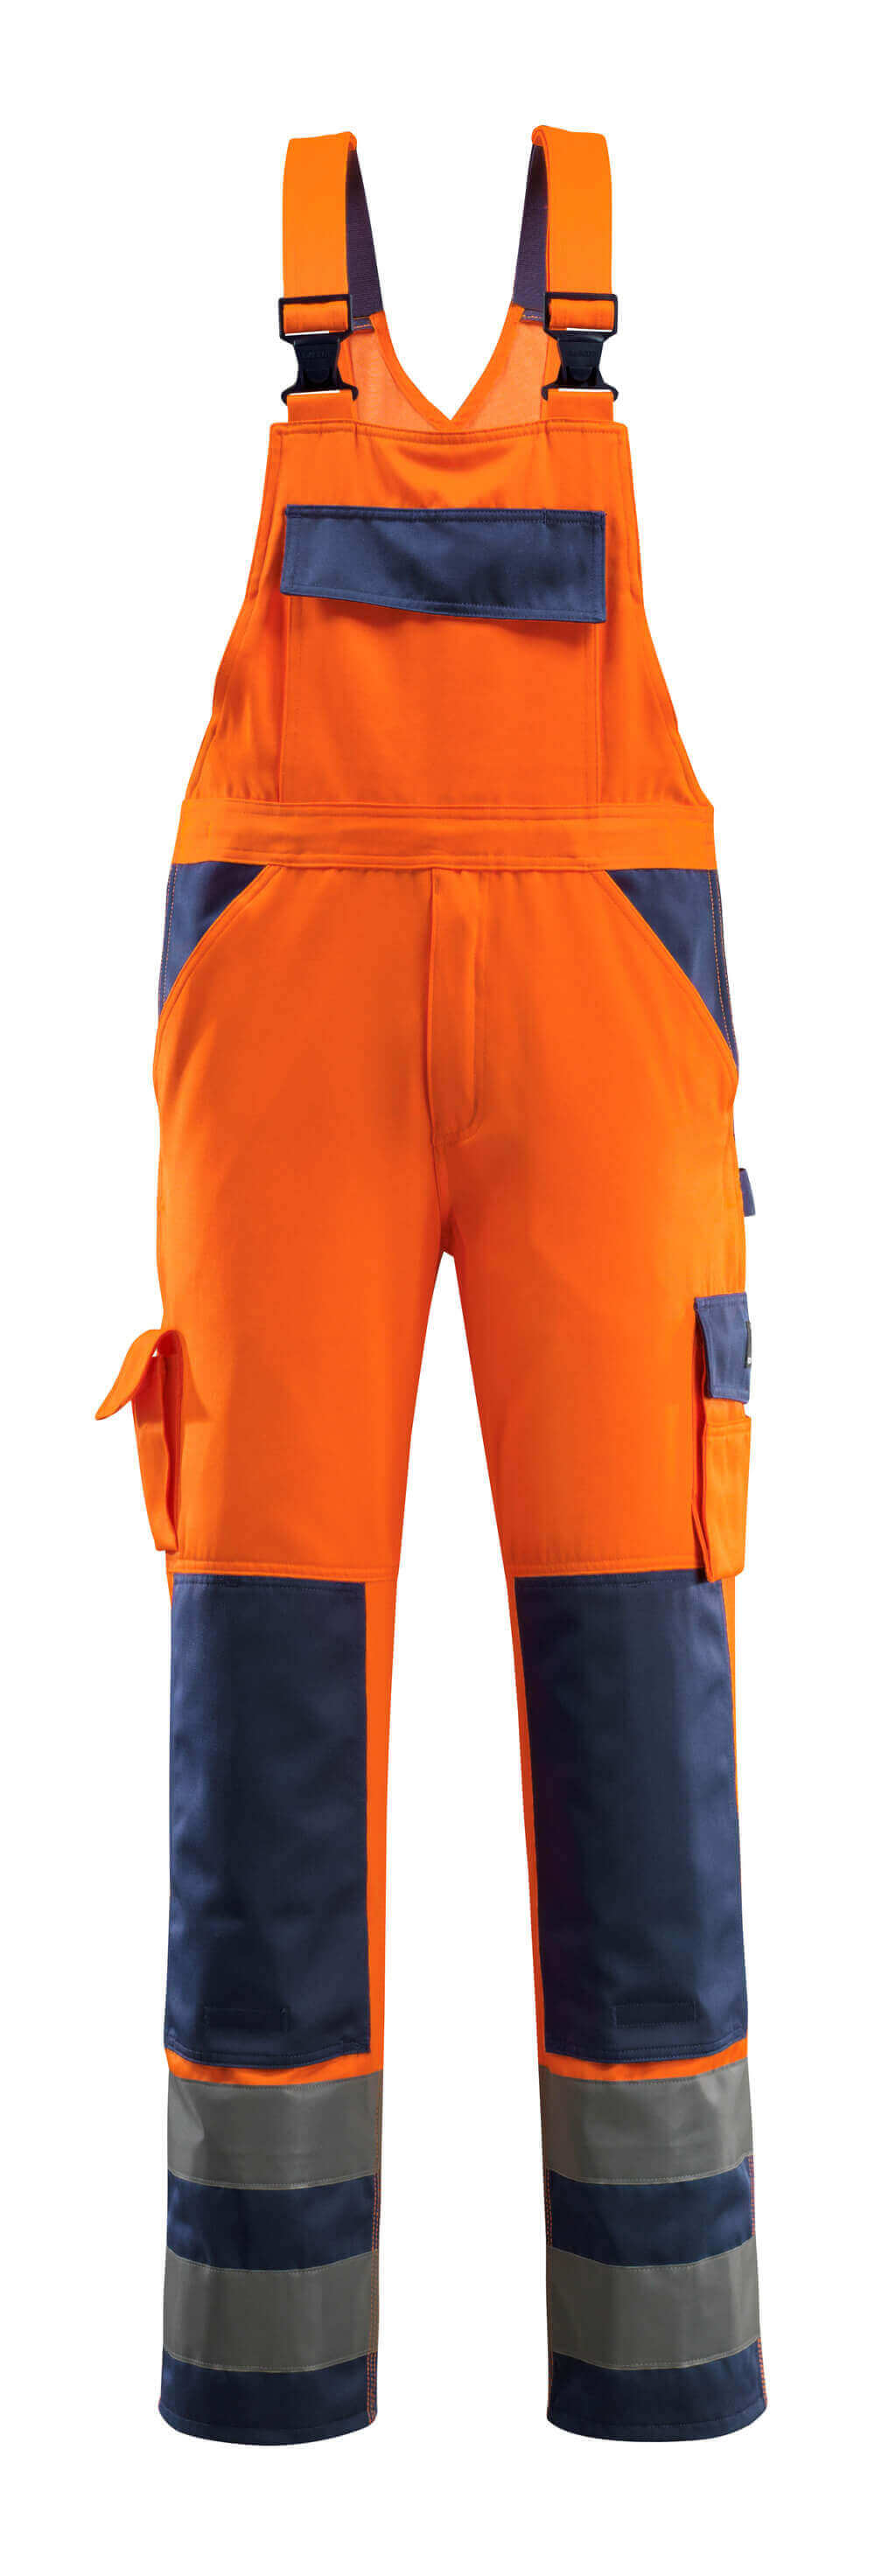 Mascot SAFE COMPETE  Barras Bib & Brace with kneepad pockets 07169 hi-vis orange/navy